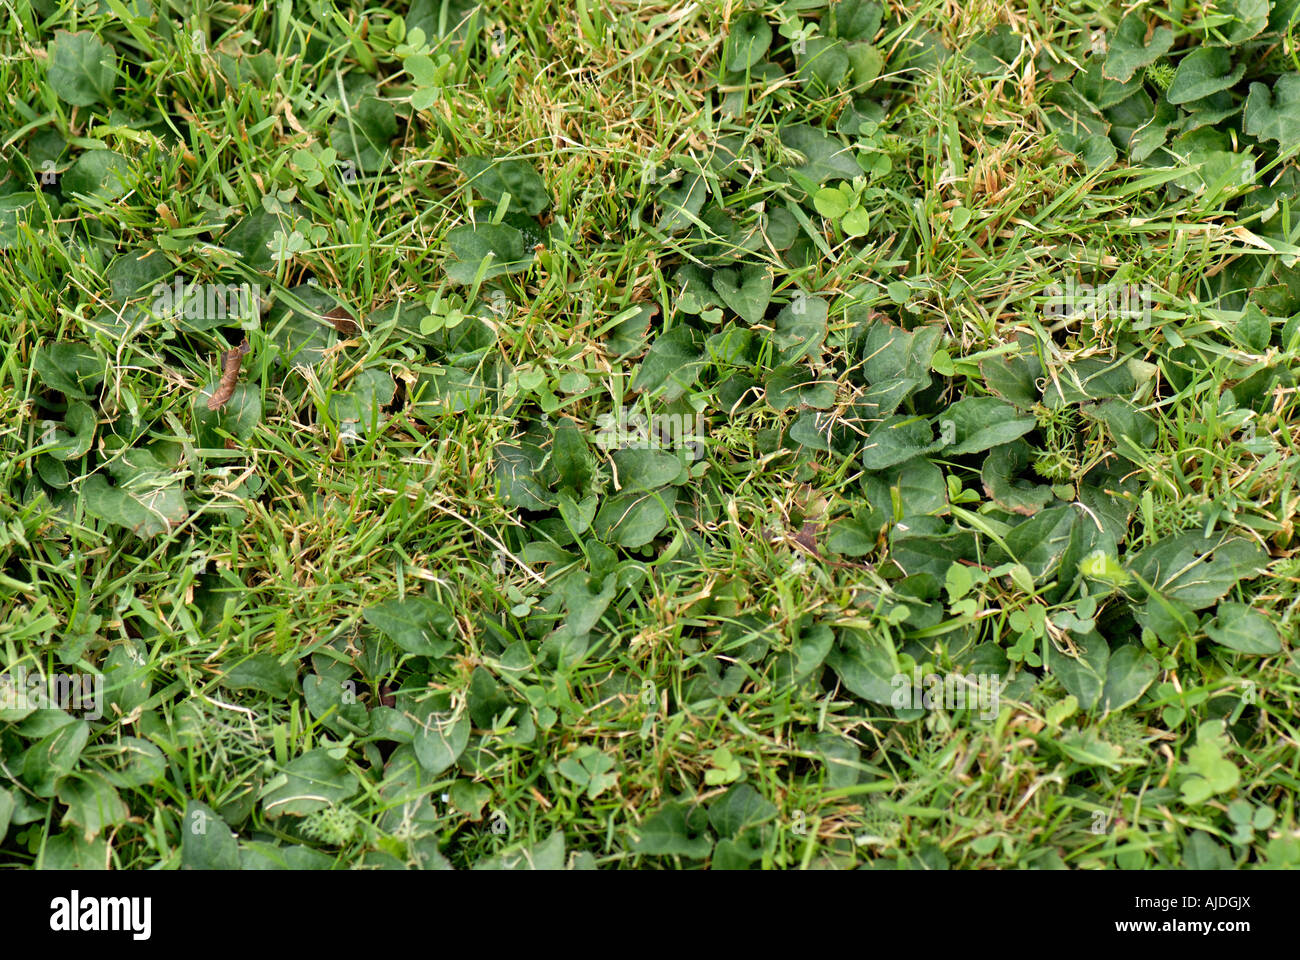 Self heal Prunella vulgaris plants in rough cut garden lawn Stock Photo